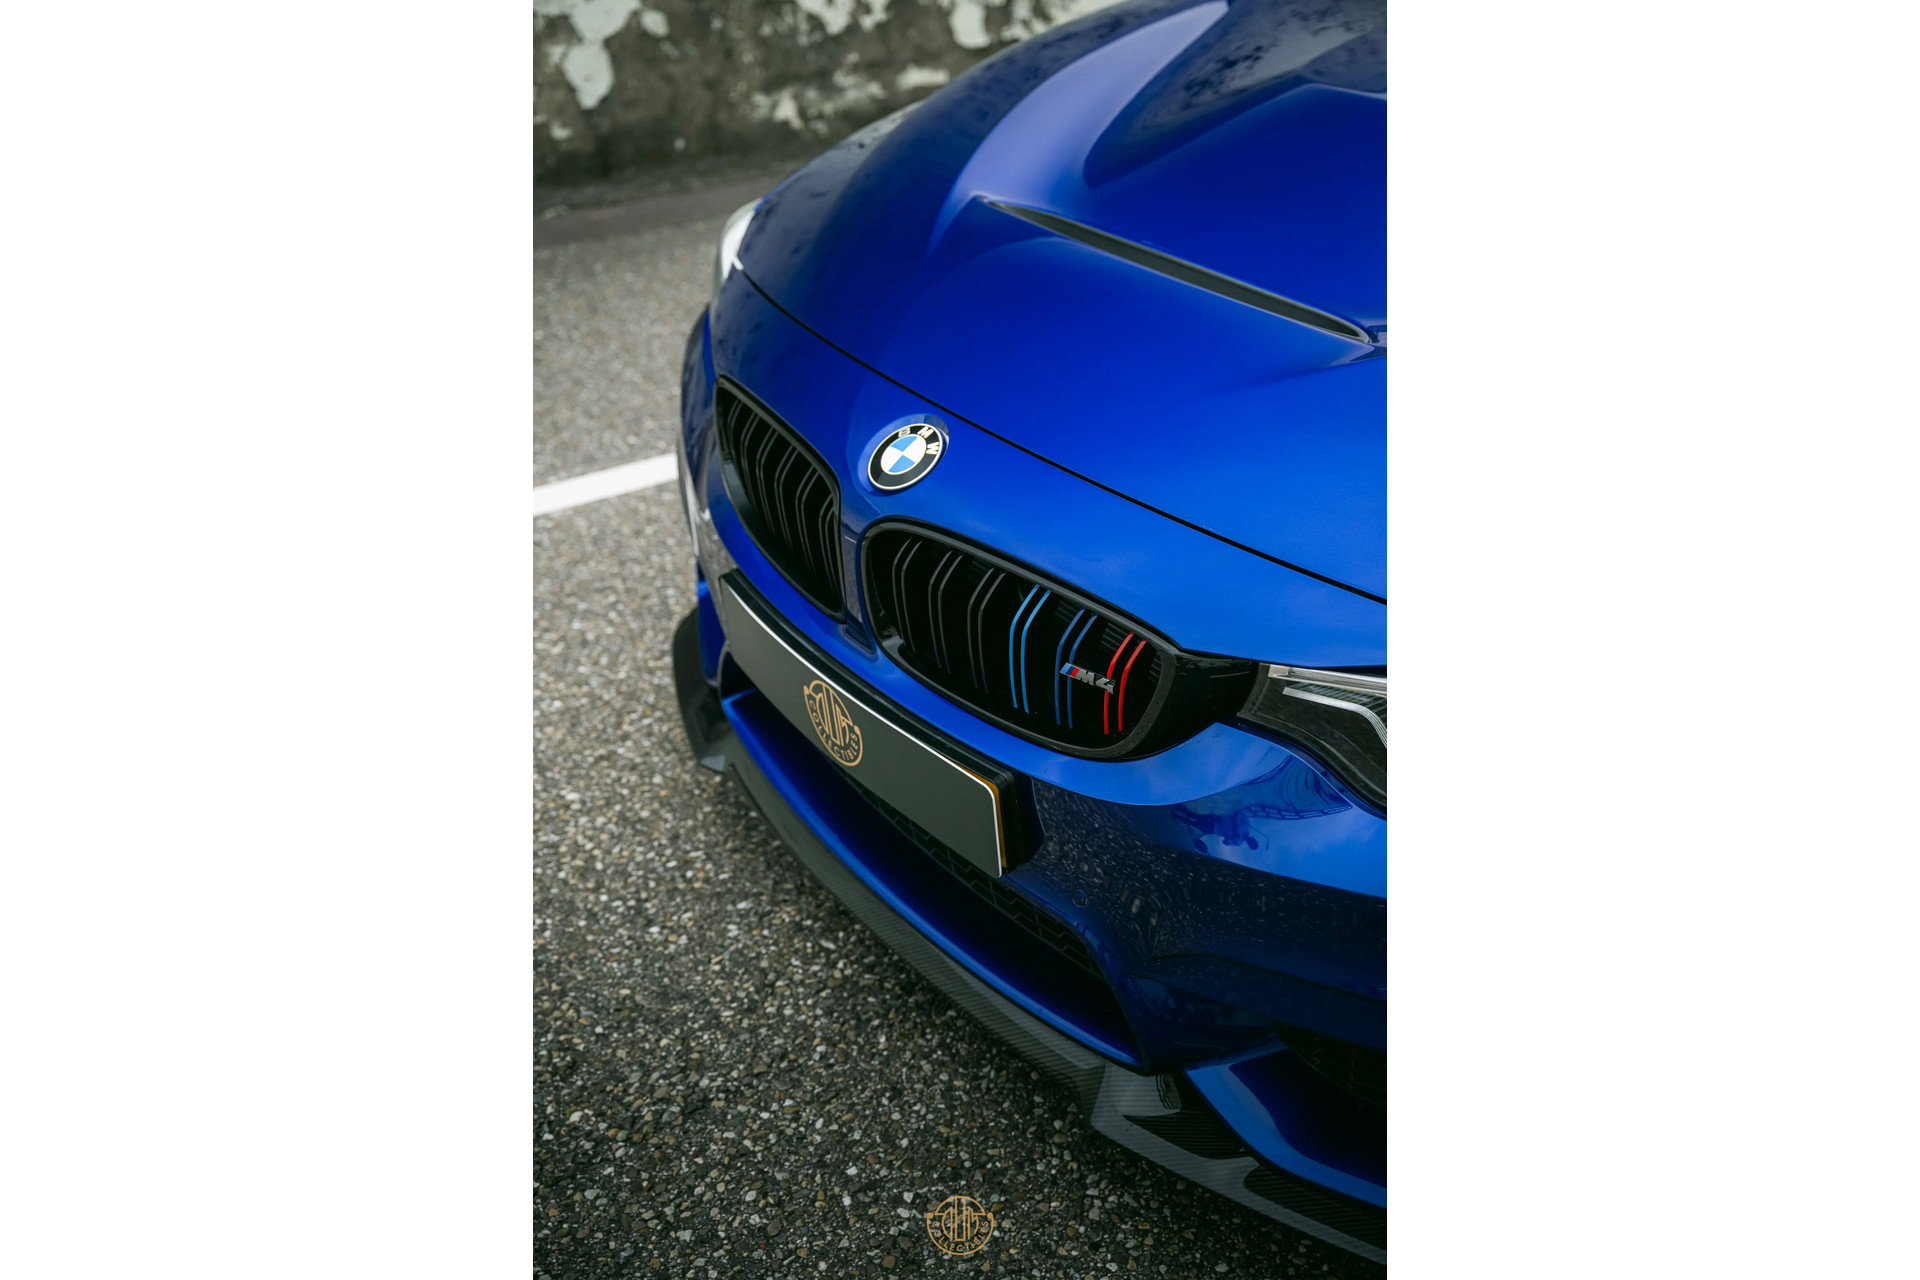 BMW 4 Serie Coupé M4 CS 2017 San marino blau metallic 32